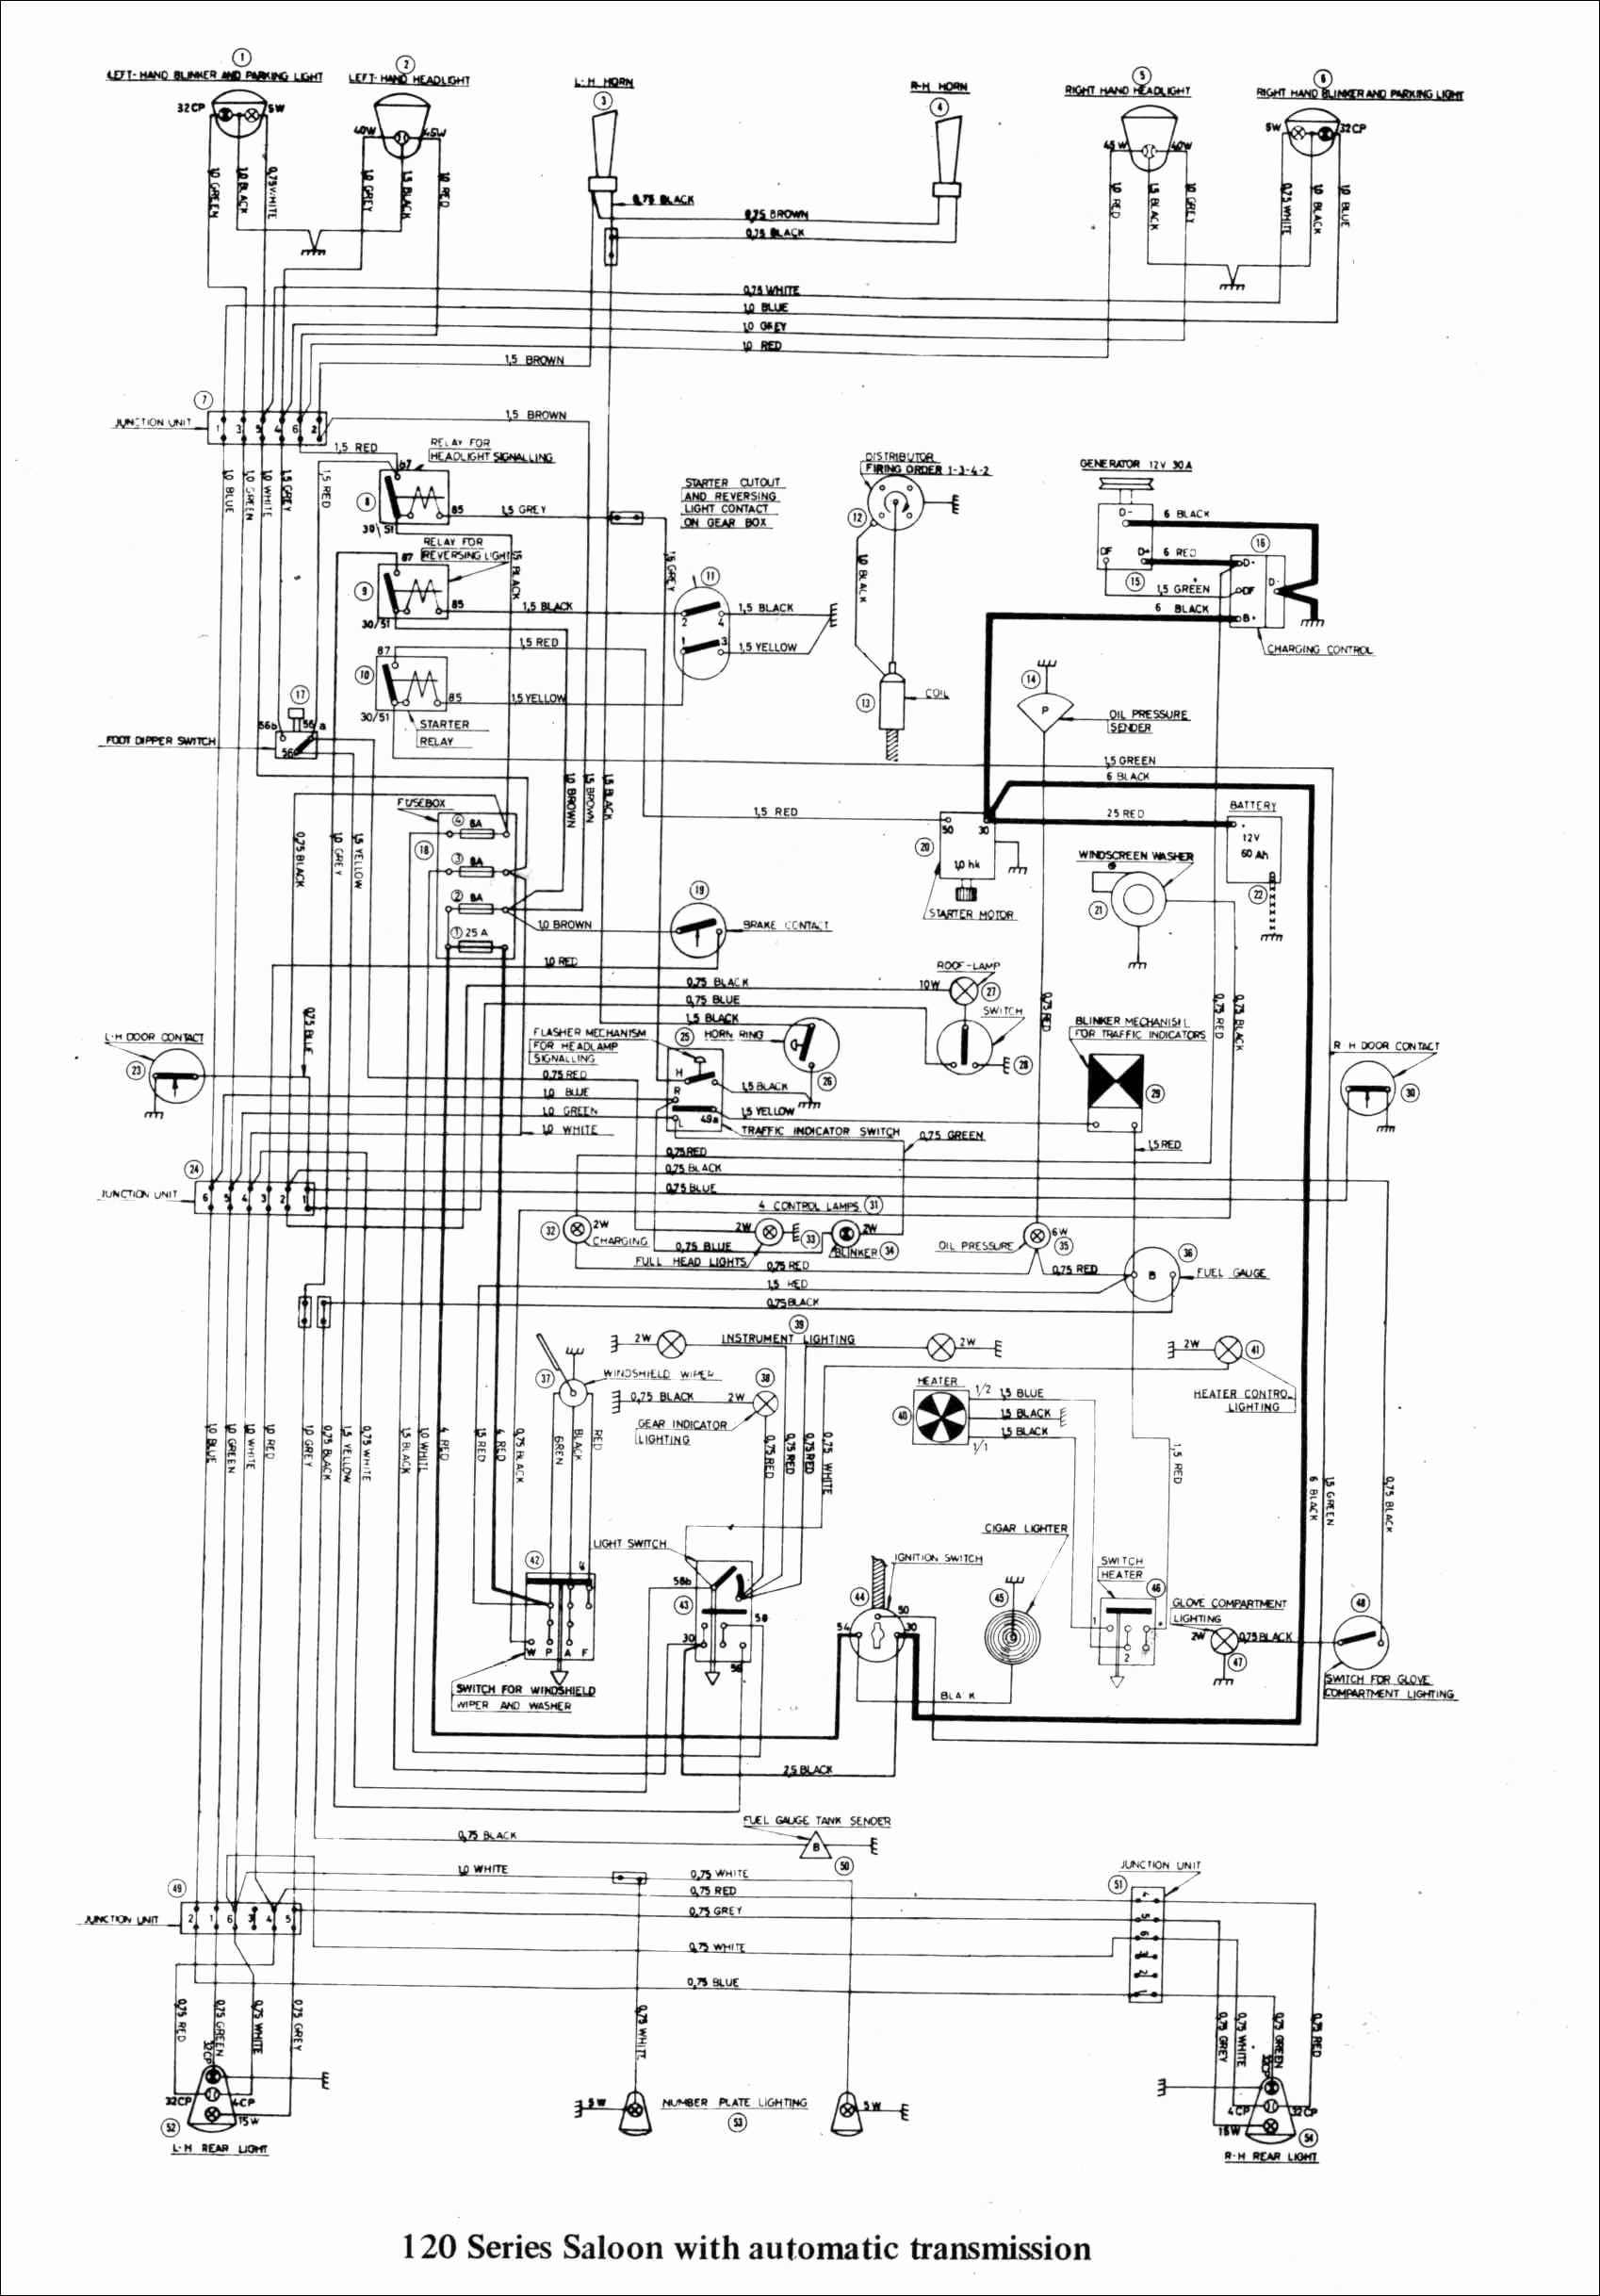 2010 ford F150 Wiring Diagram Best Sw Em Od Retrofitting Vintage Volvo Refer Wiring Diagram